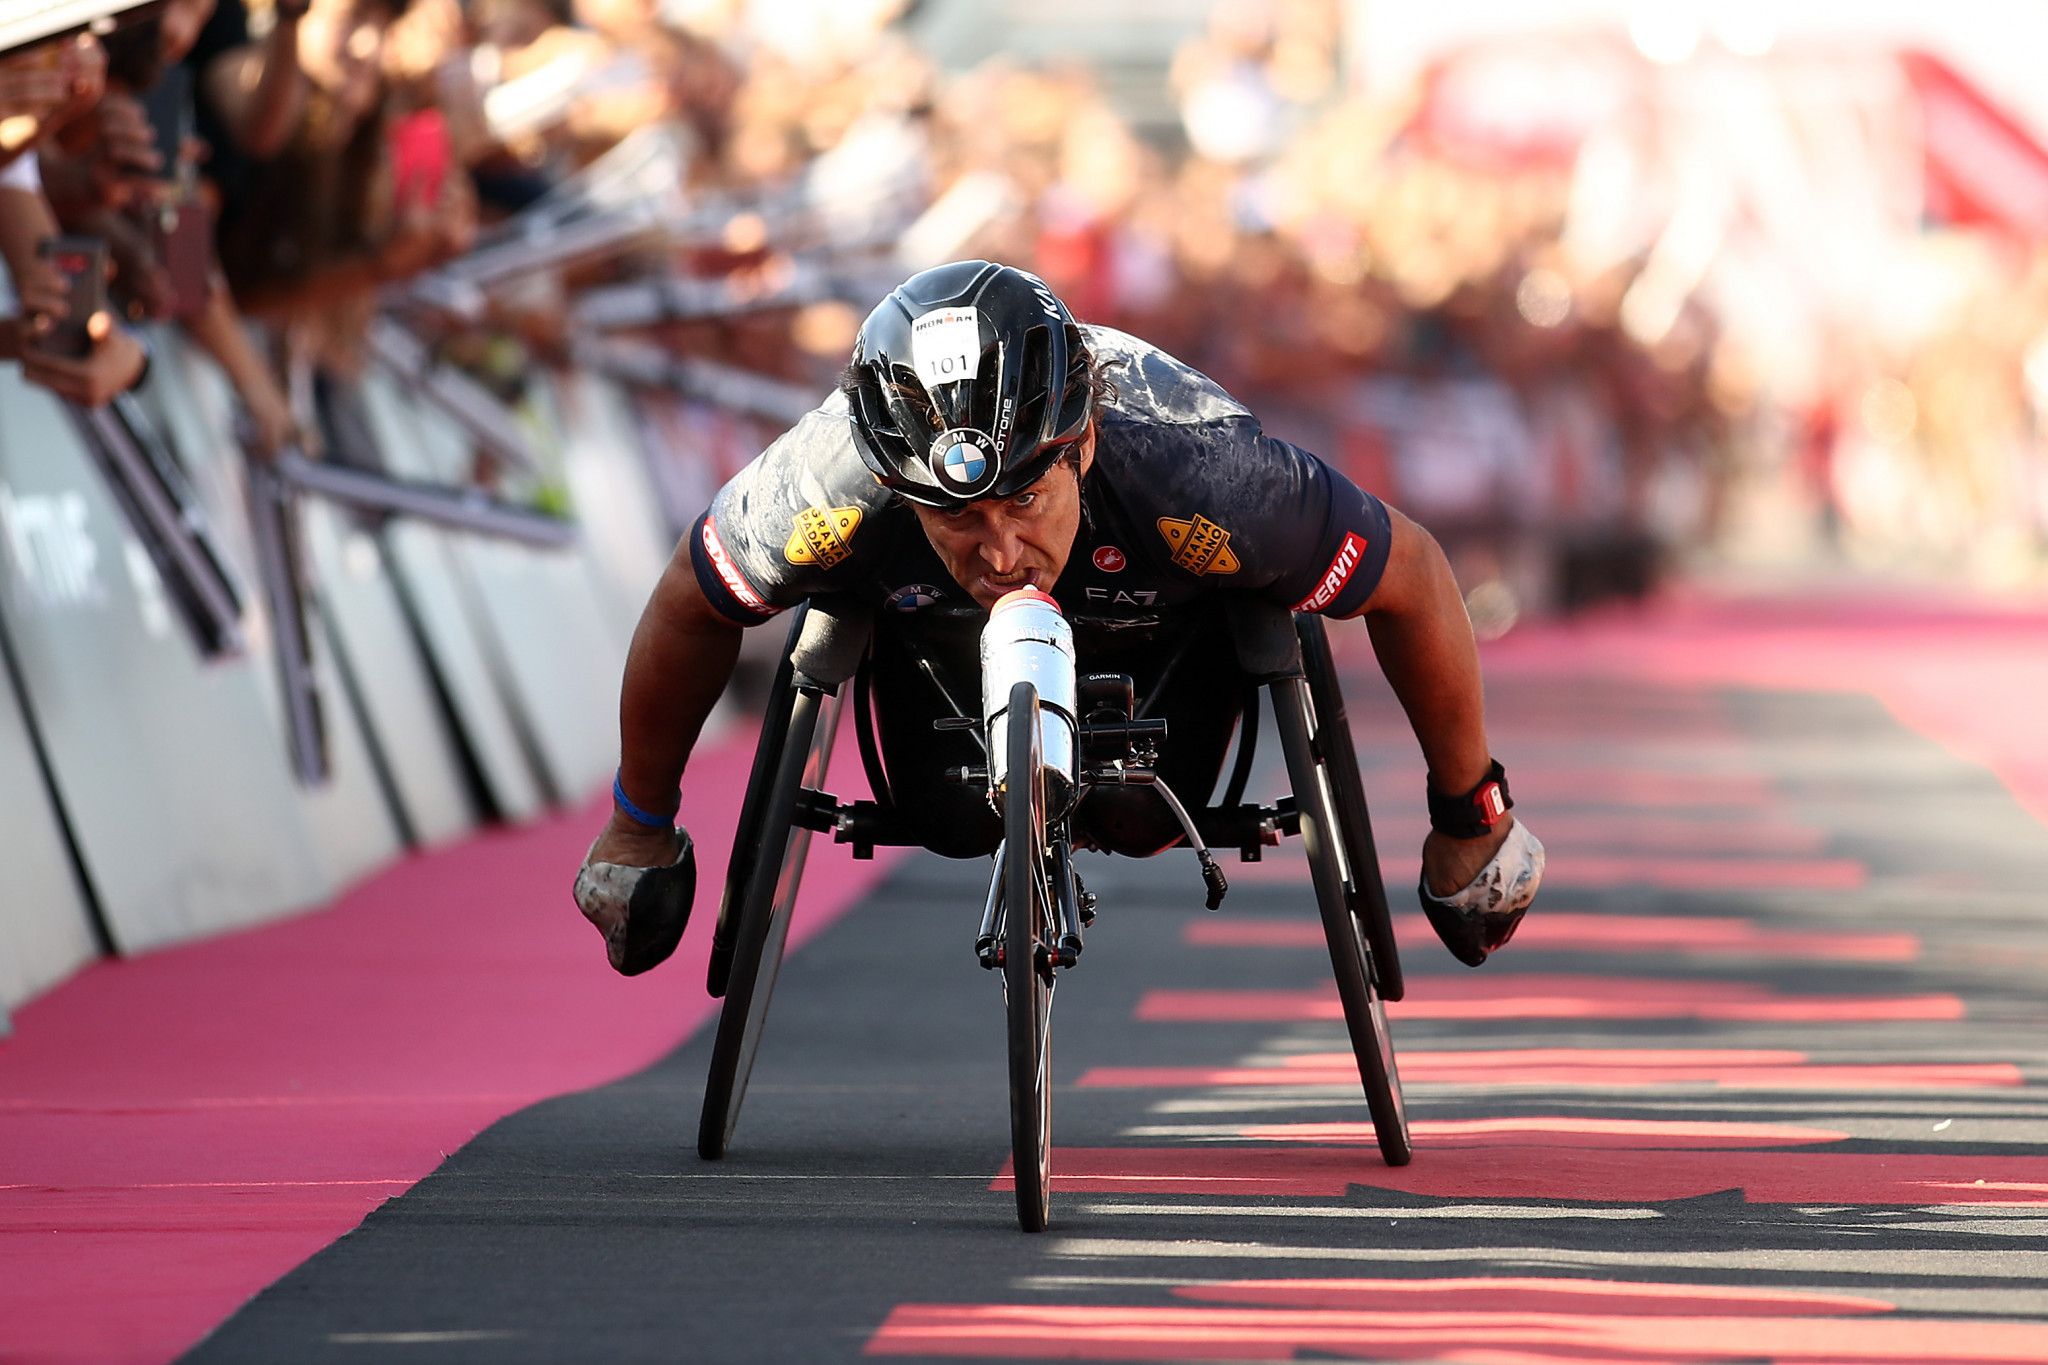 Four-time Paralympic gold medallist Zanardi has third operation following handcycling crash